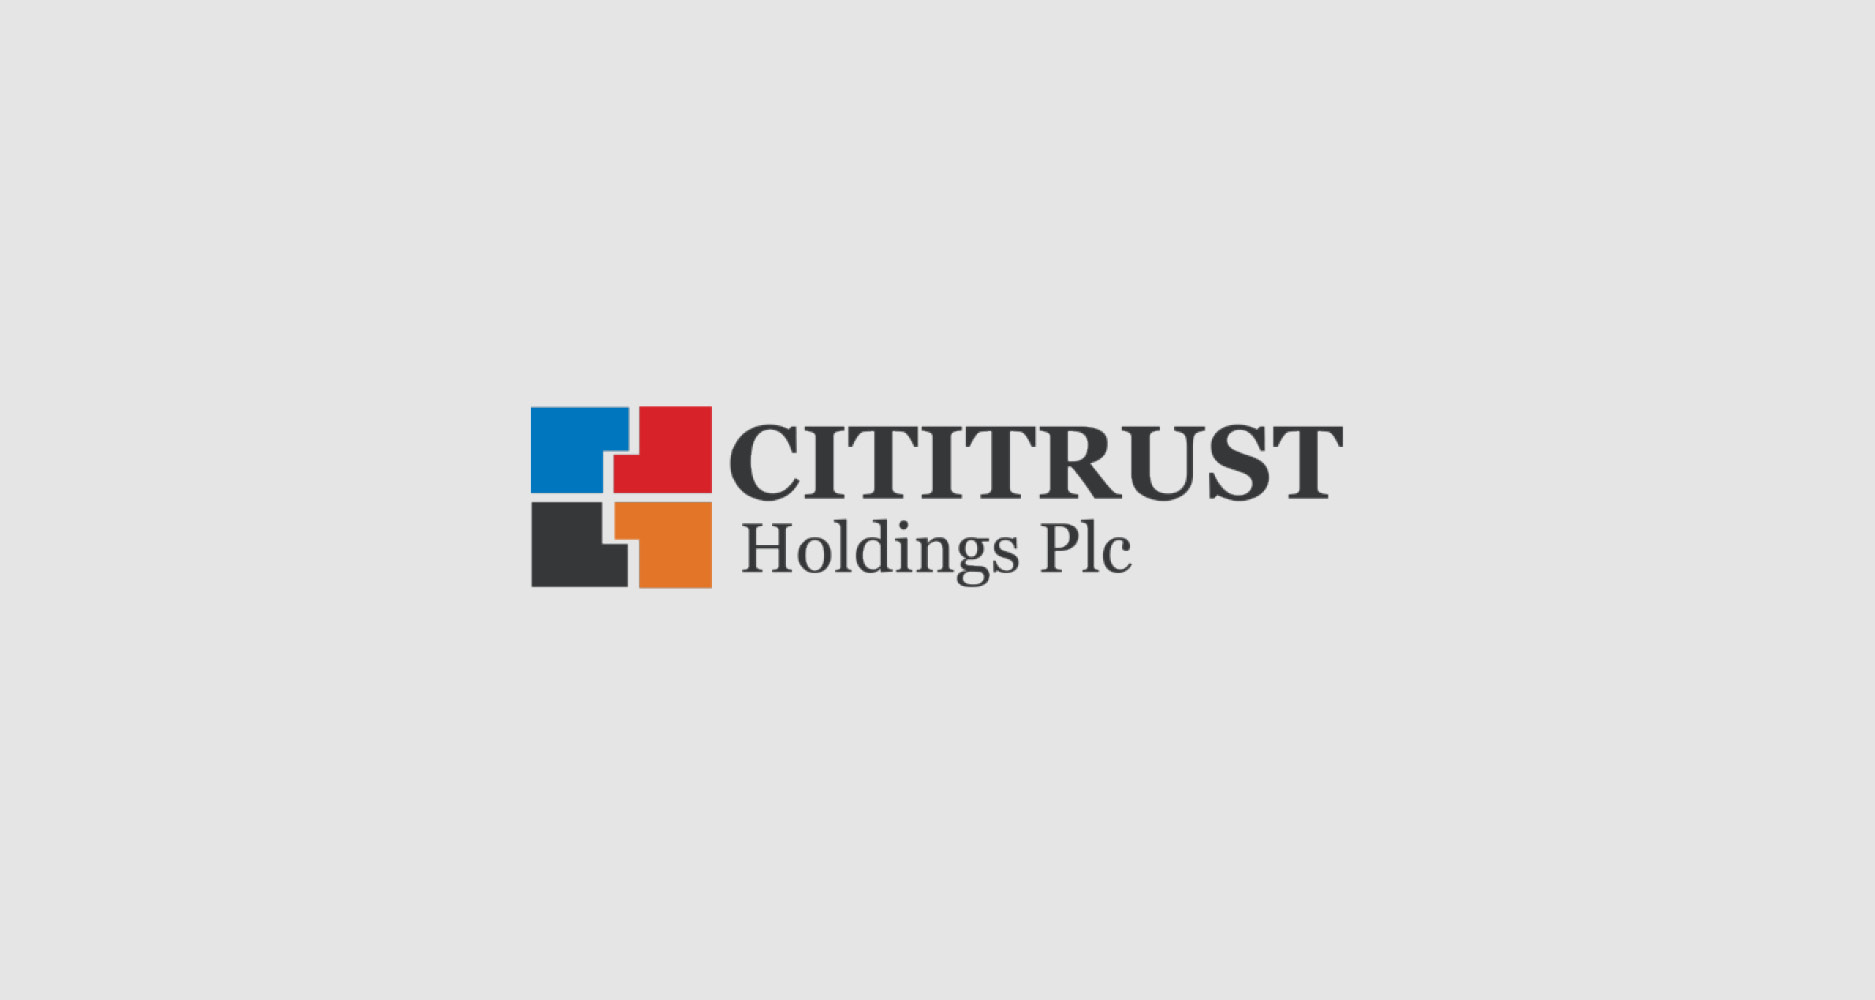 Cititrust holdings